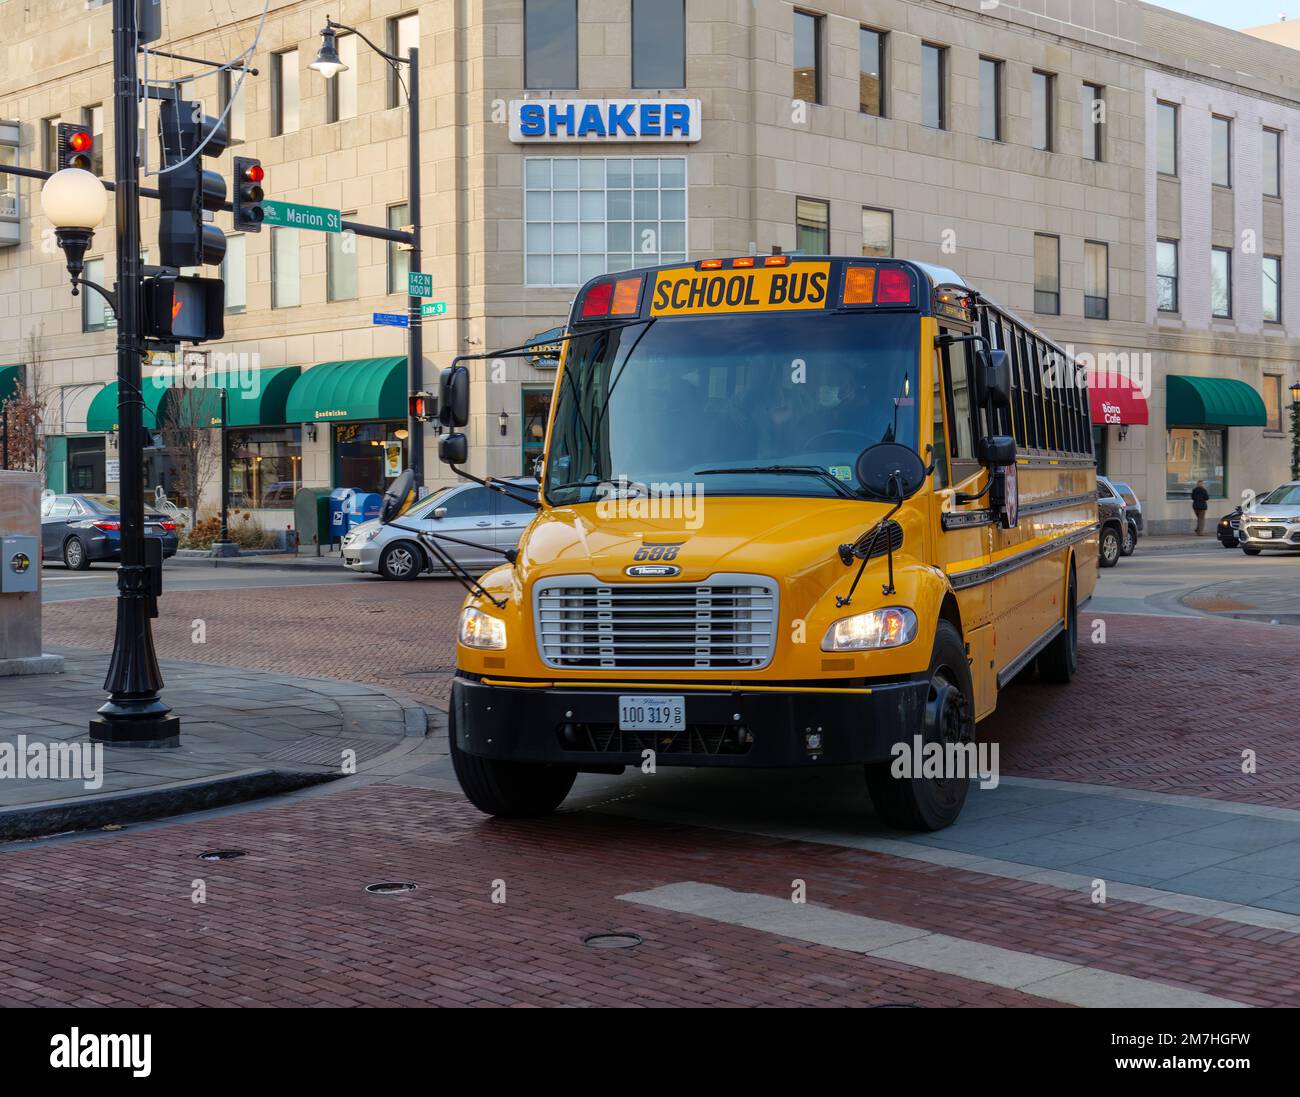 School bus and pedestrian crossing. Stock Photo